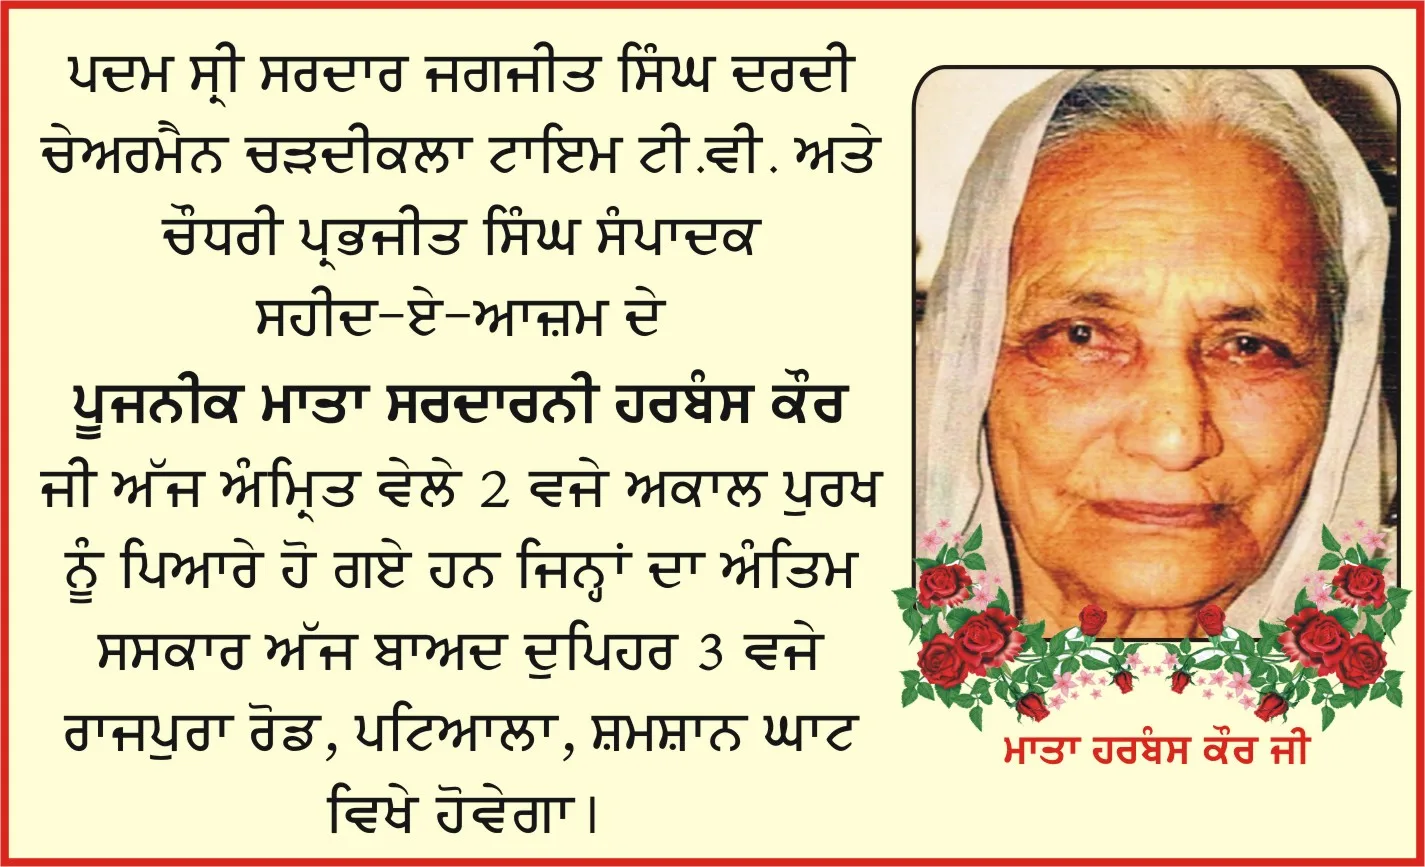 Punjab’s Media Barron bereaved, mother passes away; cremation today